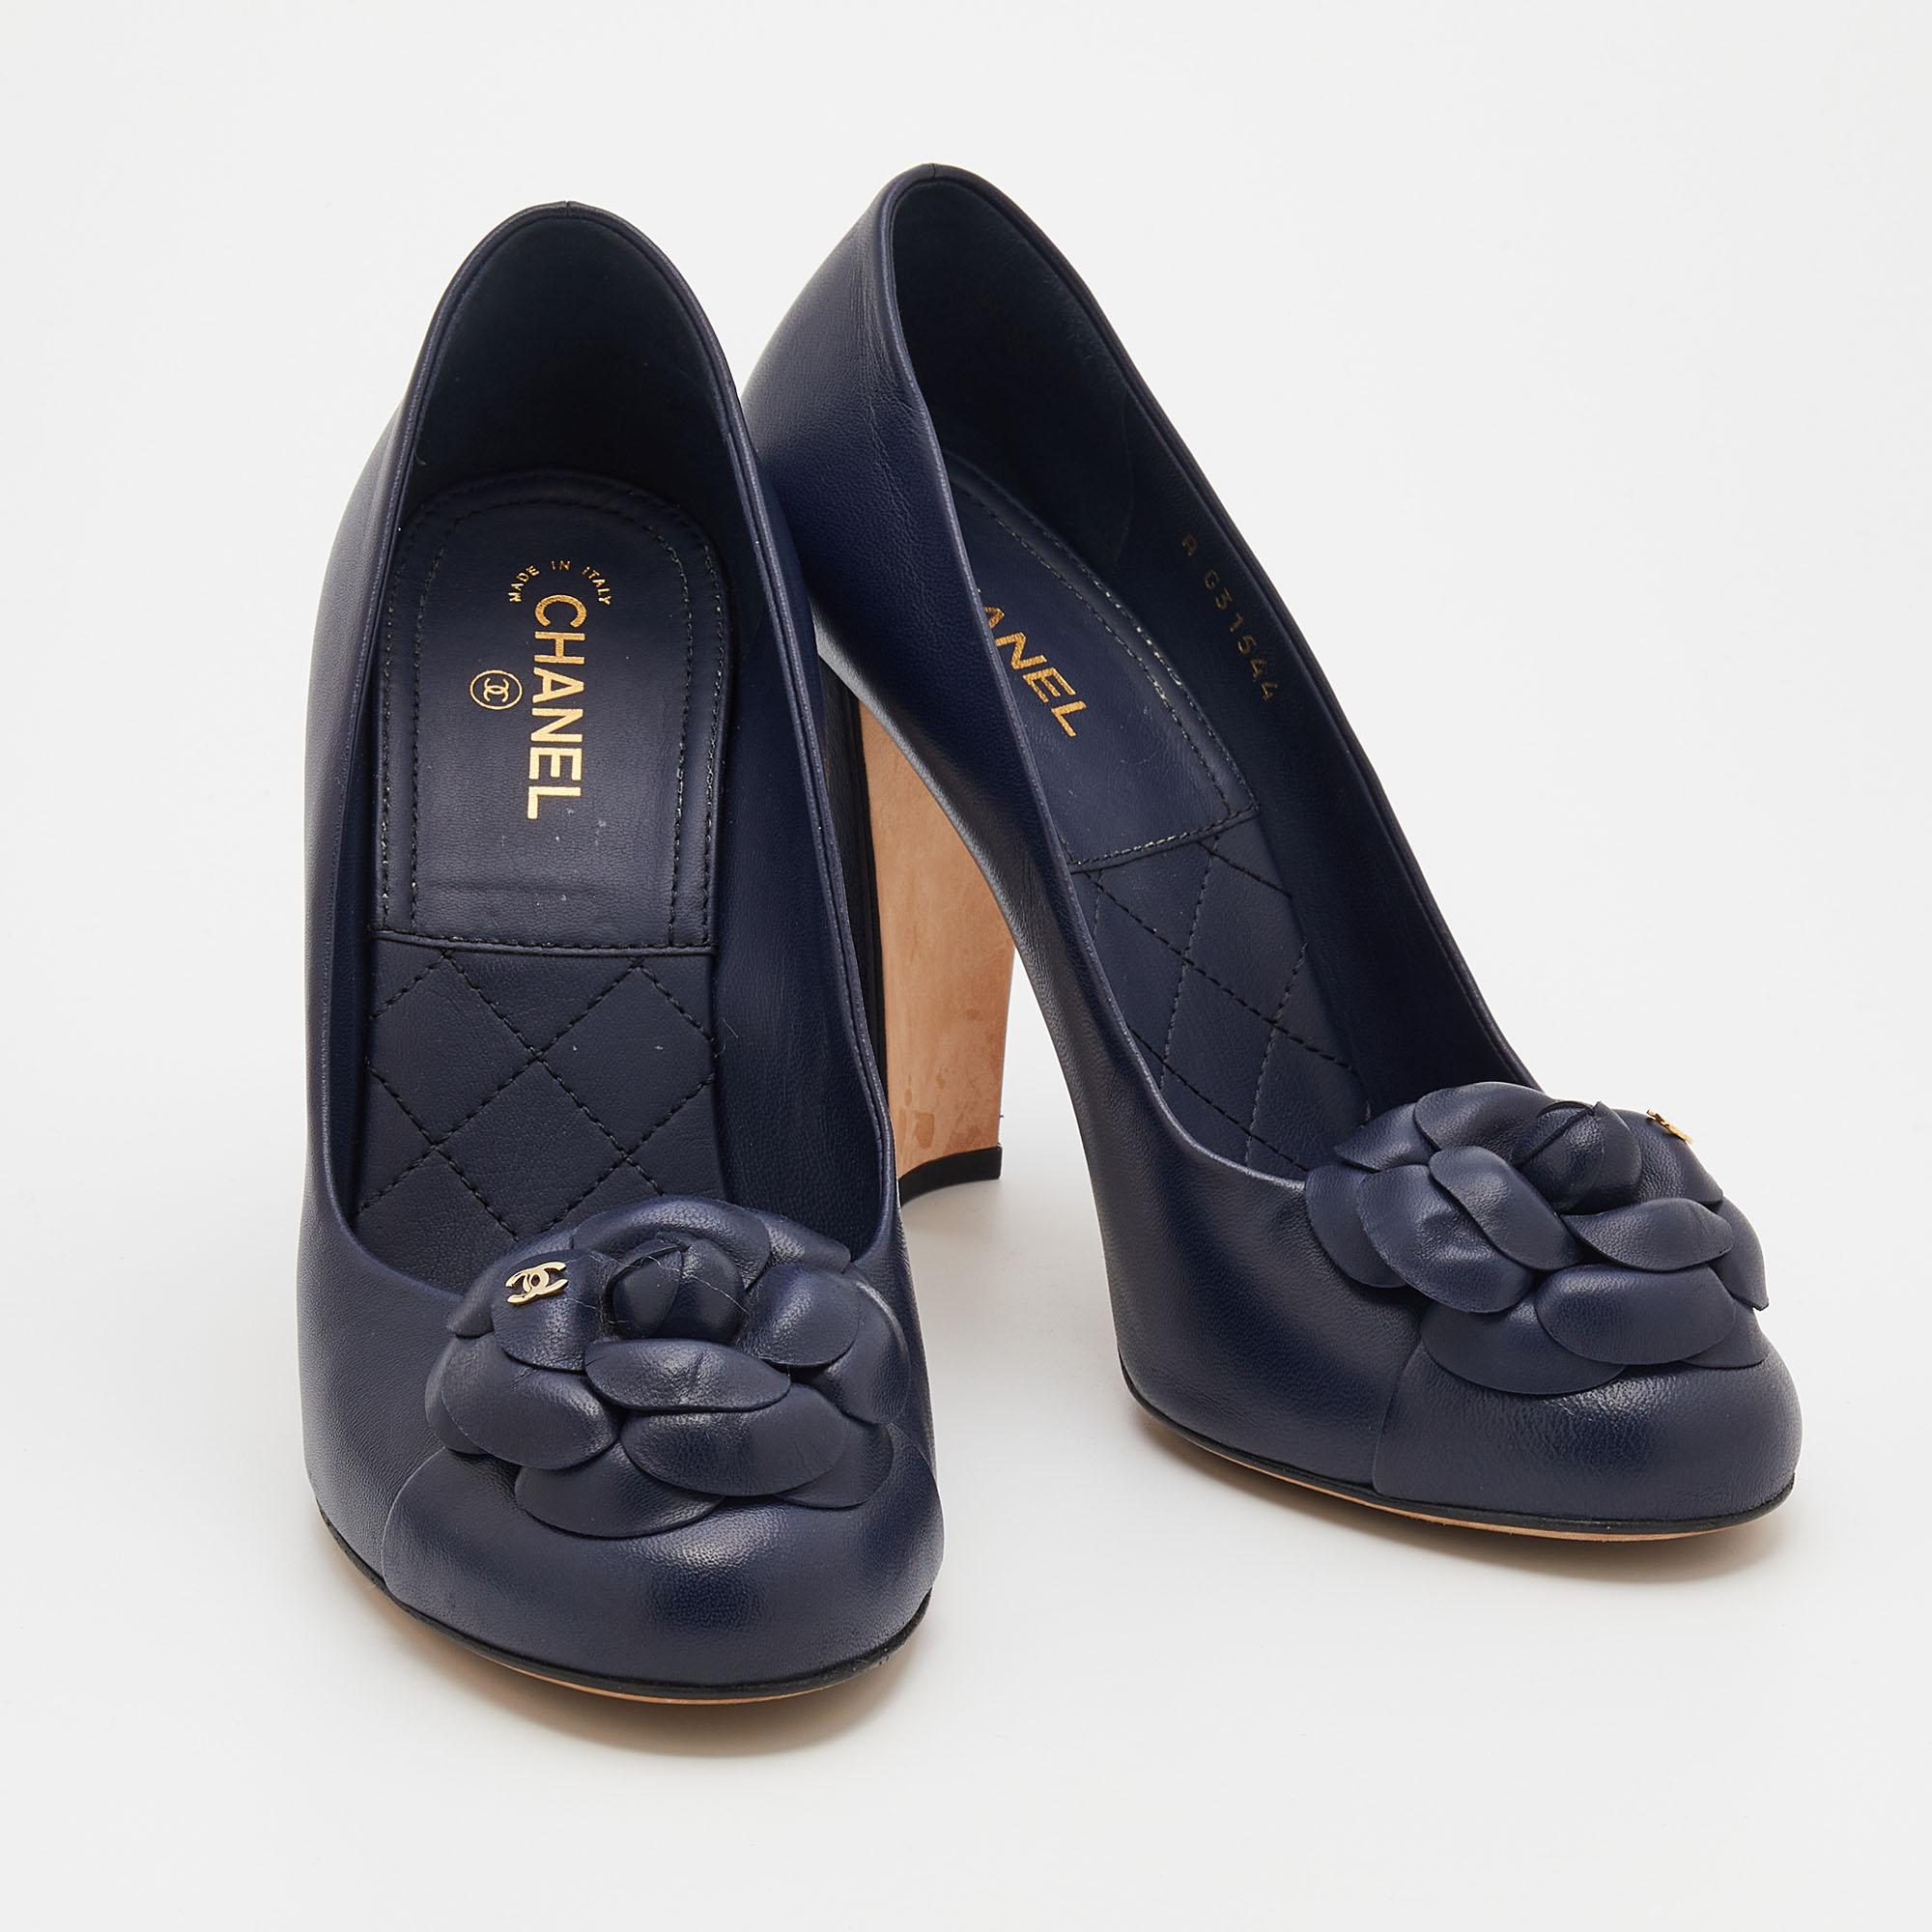 Women's Chanel Navy Blue Leather Camellia Block Heel Pumps Size 39